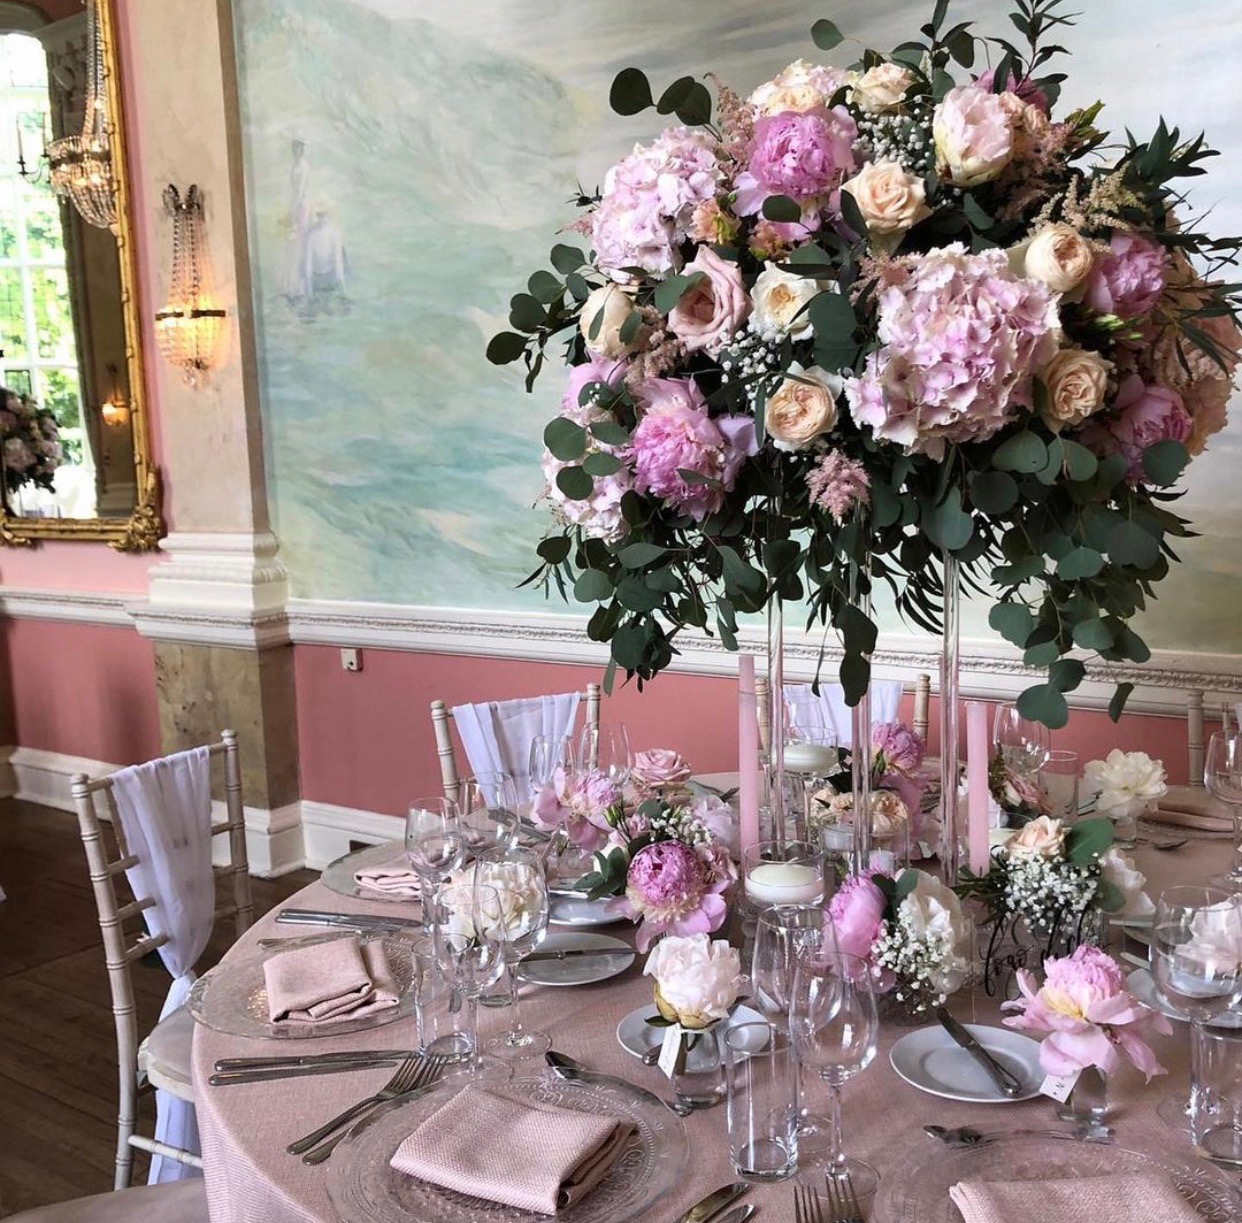 dekoracija vencanja - cvetni aranzmani od prirodnog cveca - hortenzije - ruze - zelenilo - luksuzna dekoracija vencanja IMG-4903